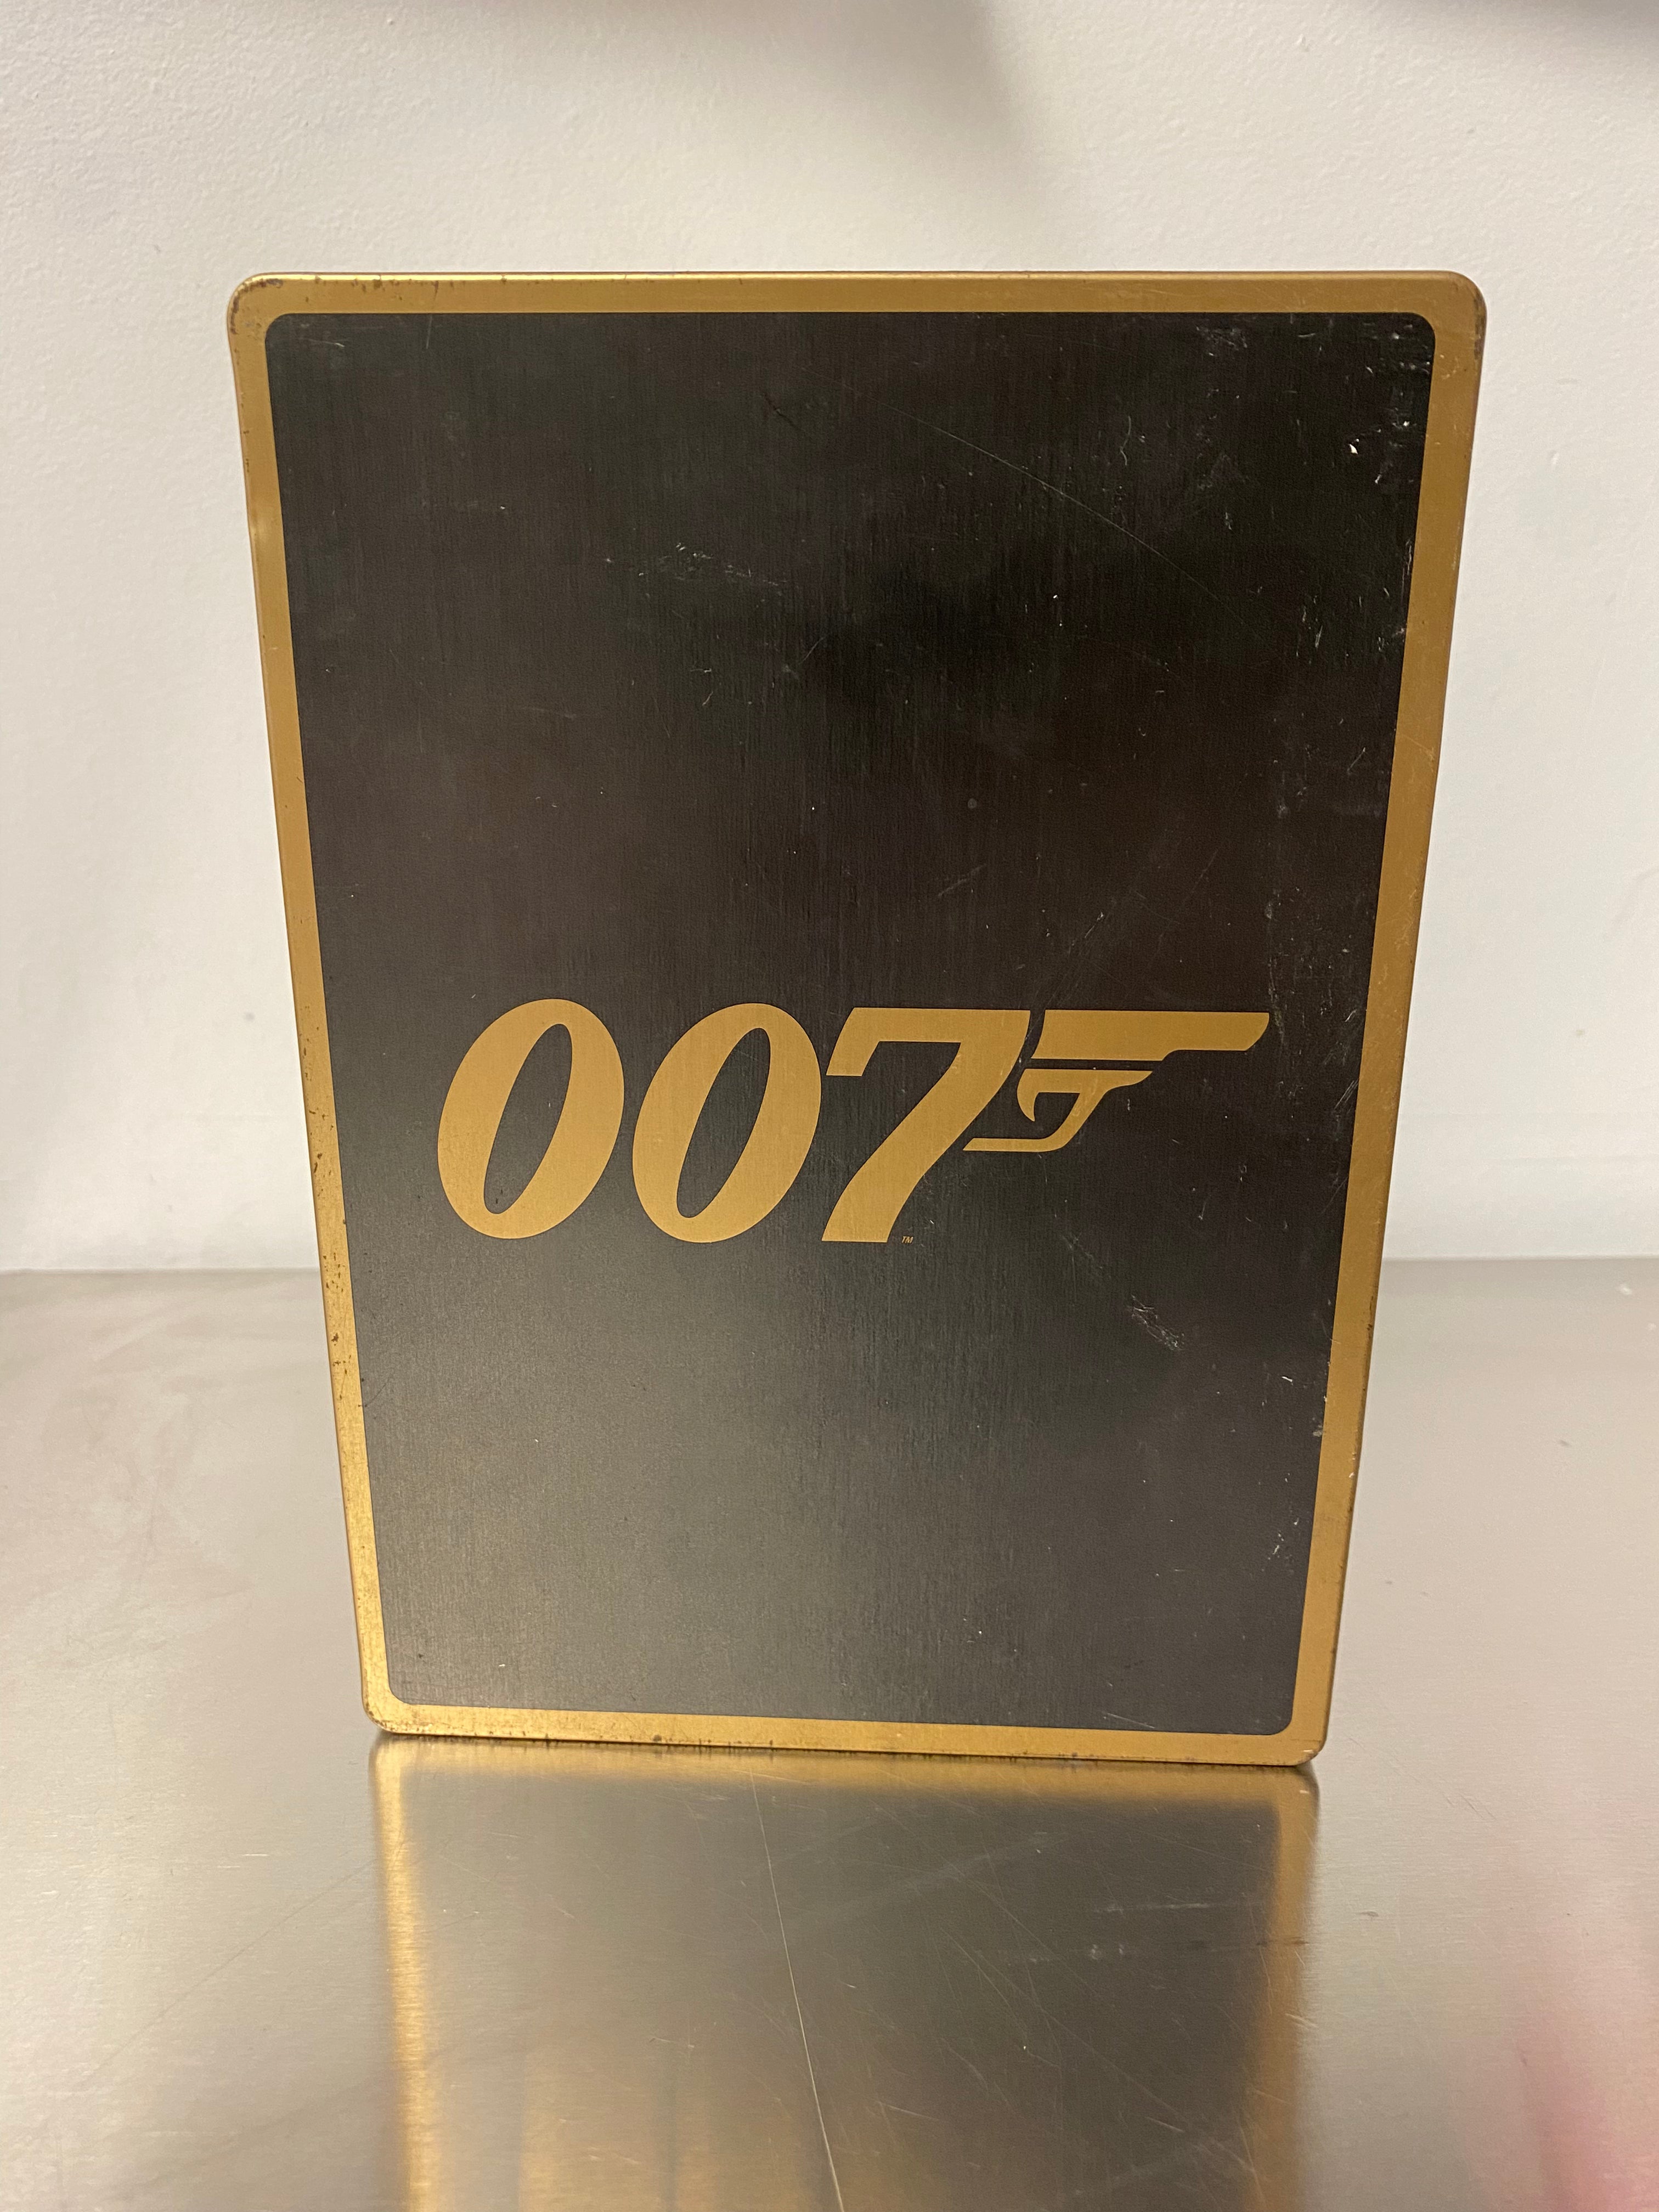 James Bond 007 Quantum of Solace - Microsoft Xbox 360